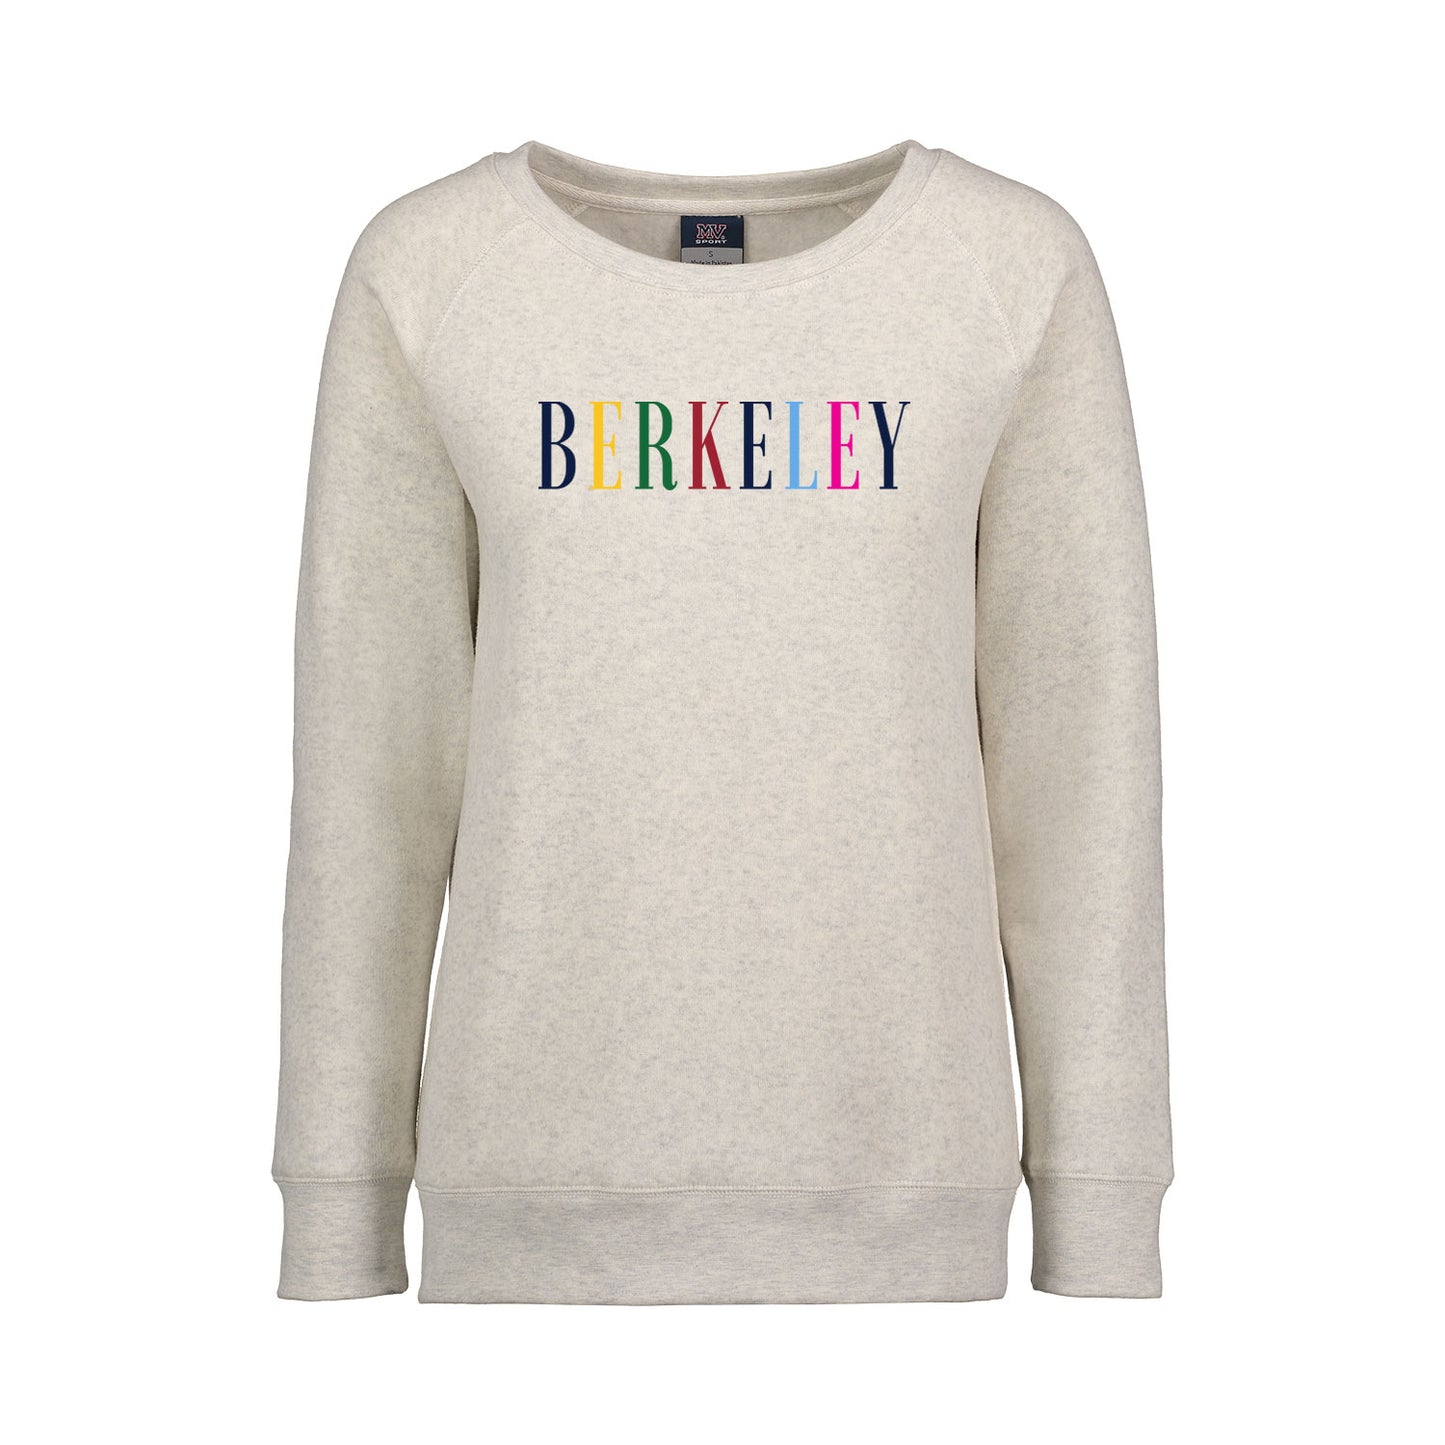 Berkeley city inspired multi color embroidered women's raglan crew-neck sweatshirt-Oatmeal-Shop College Wear